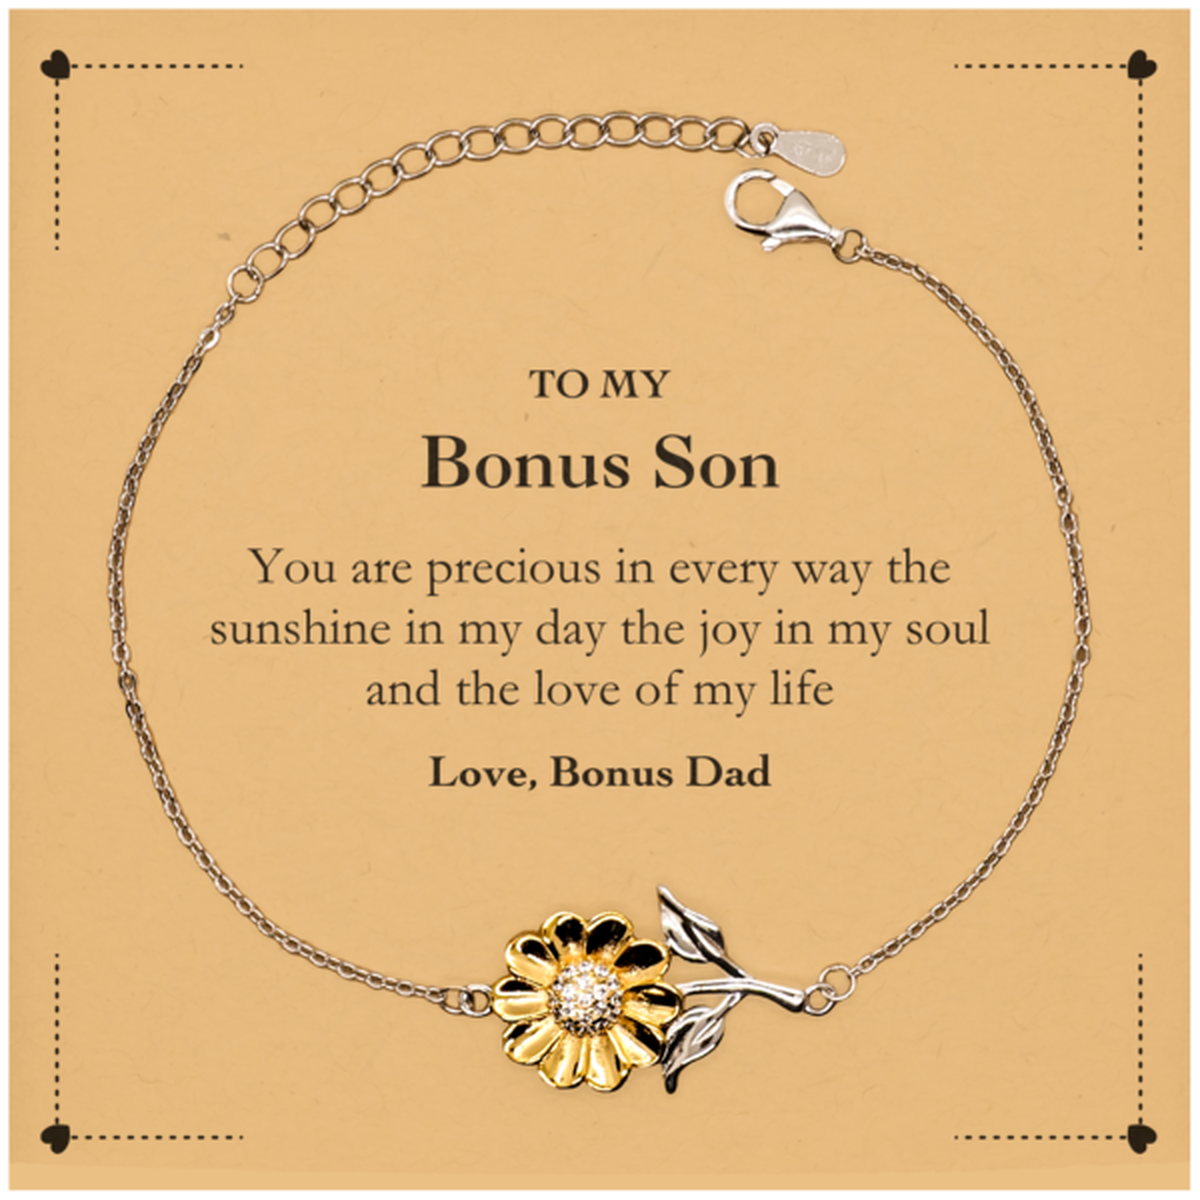 Graduation Gifts for Bonus Son Sunflower Bracelet Present from Bonus Dad, Christmas Bonus Son Birthday Gifts Bonus Son You are precious in every way the sunshine in my day. Love, Bonus Dad